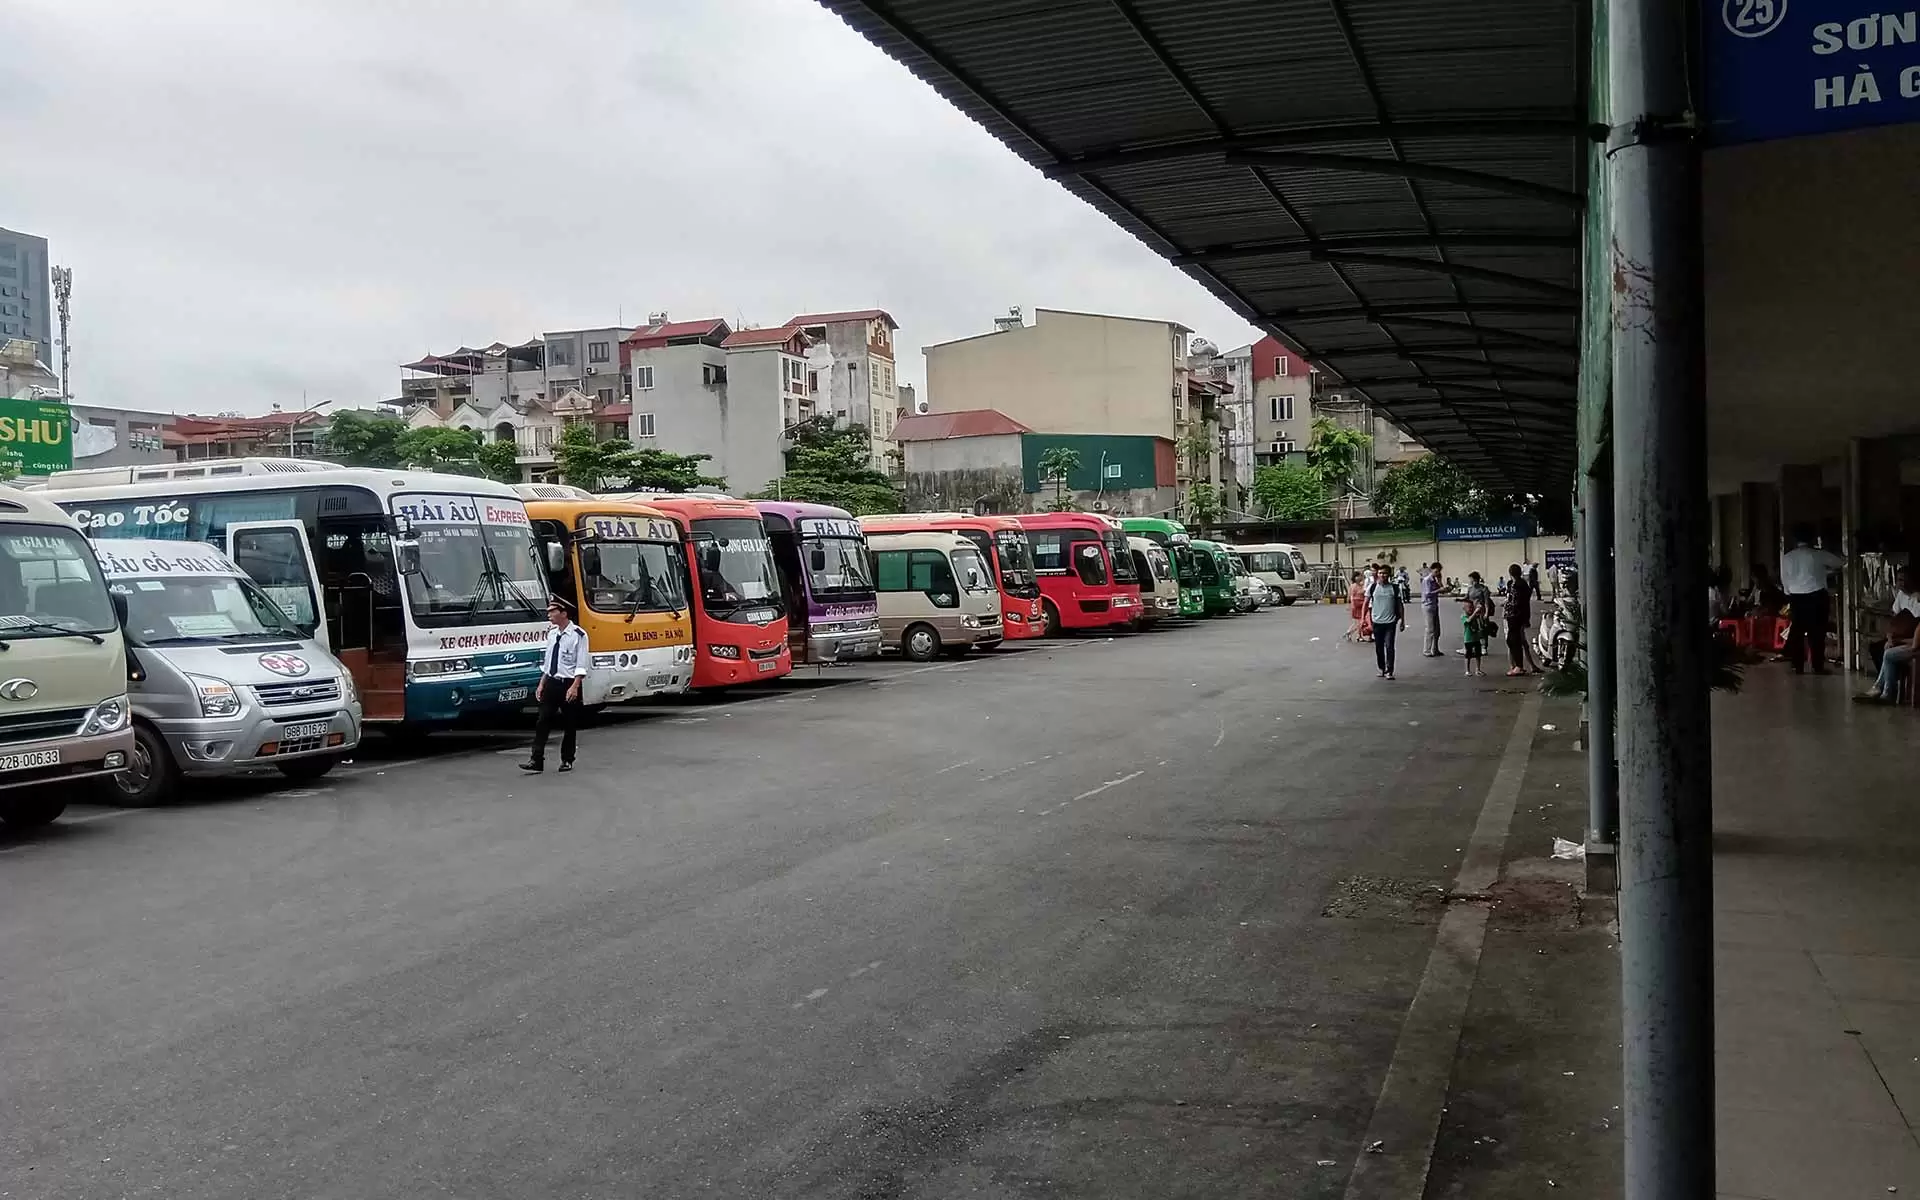 Public bus station in Vietnam